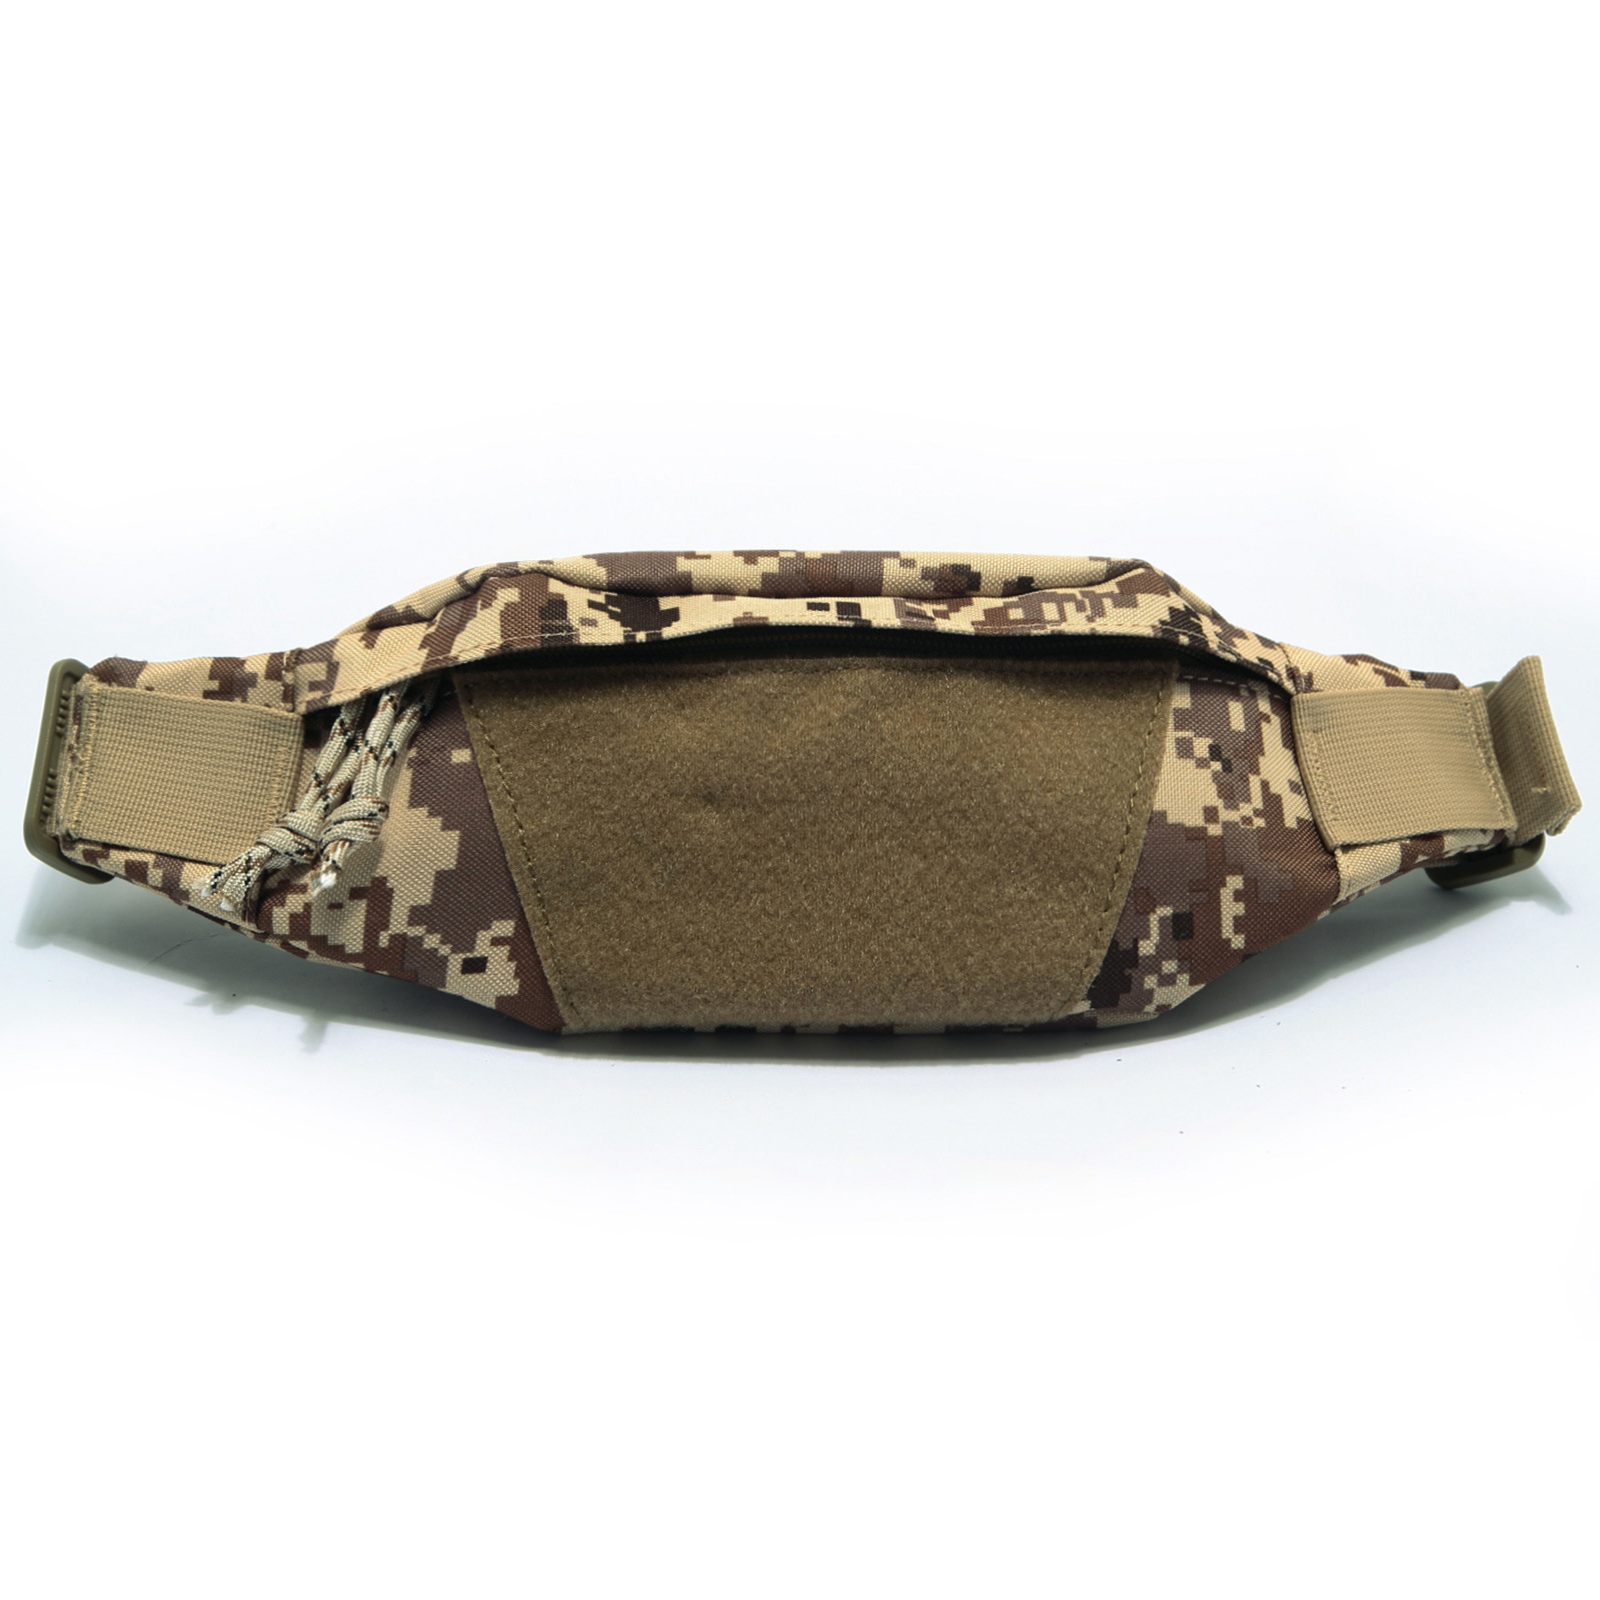 Camouflage-Tactical-Waist-Bag-Cross-Bag-Tactical-Waist-Bag-Outdoor-Fitness-Leisure-Bag-1568909-6